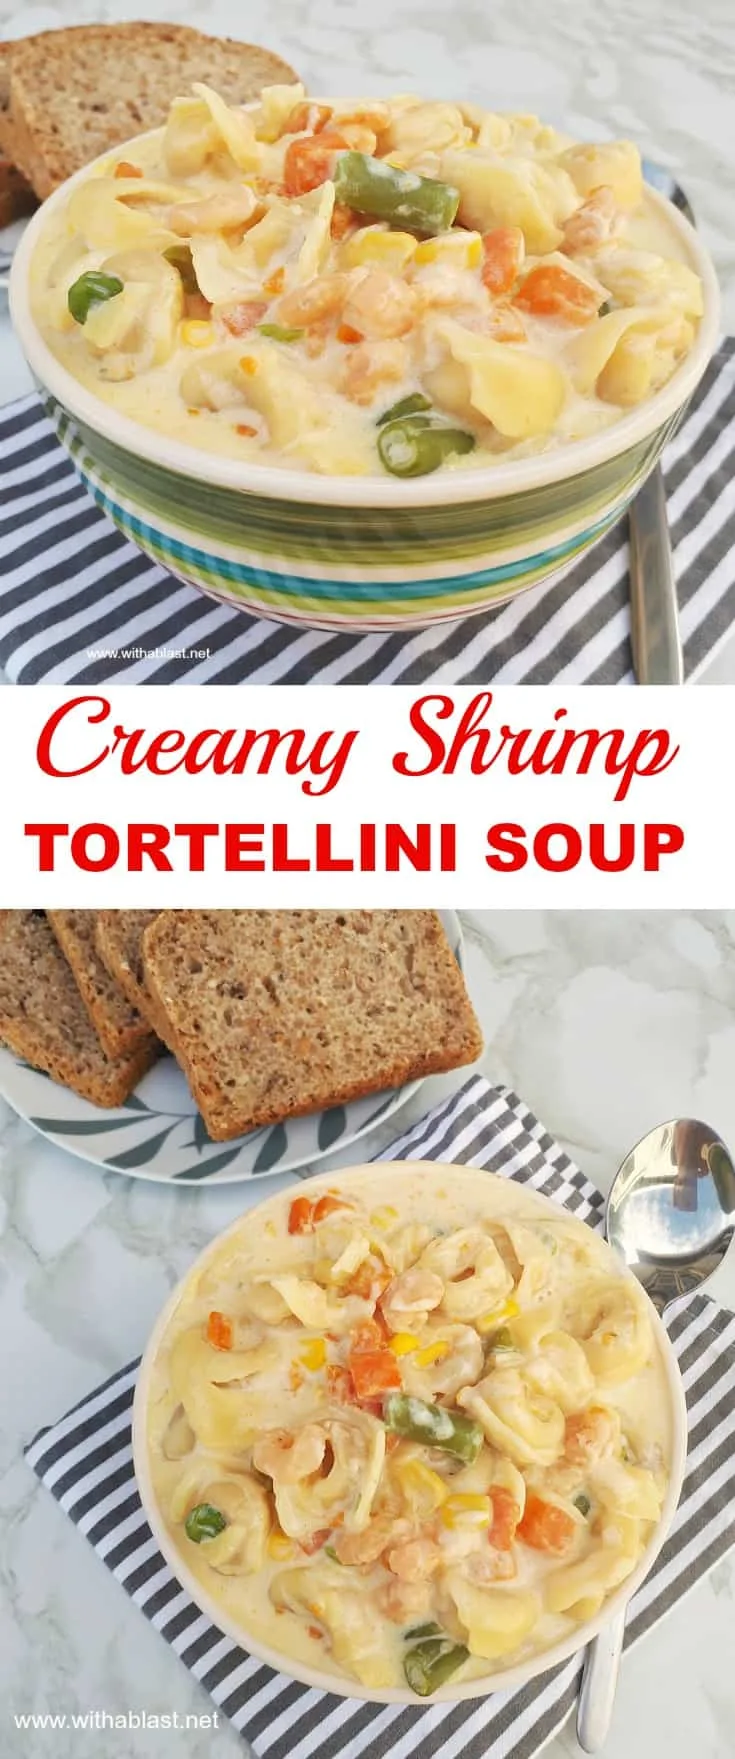 Creamy Shrimp Tortellini Soup